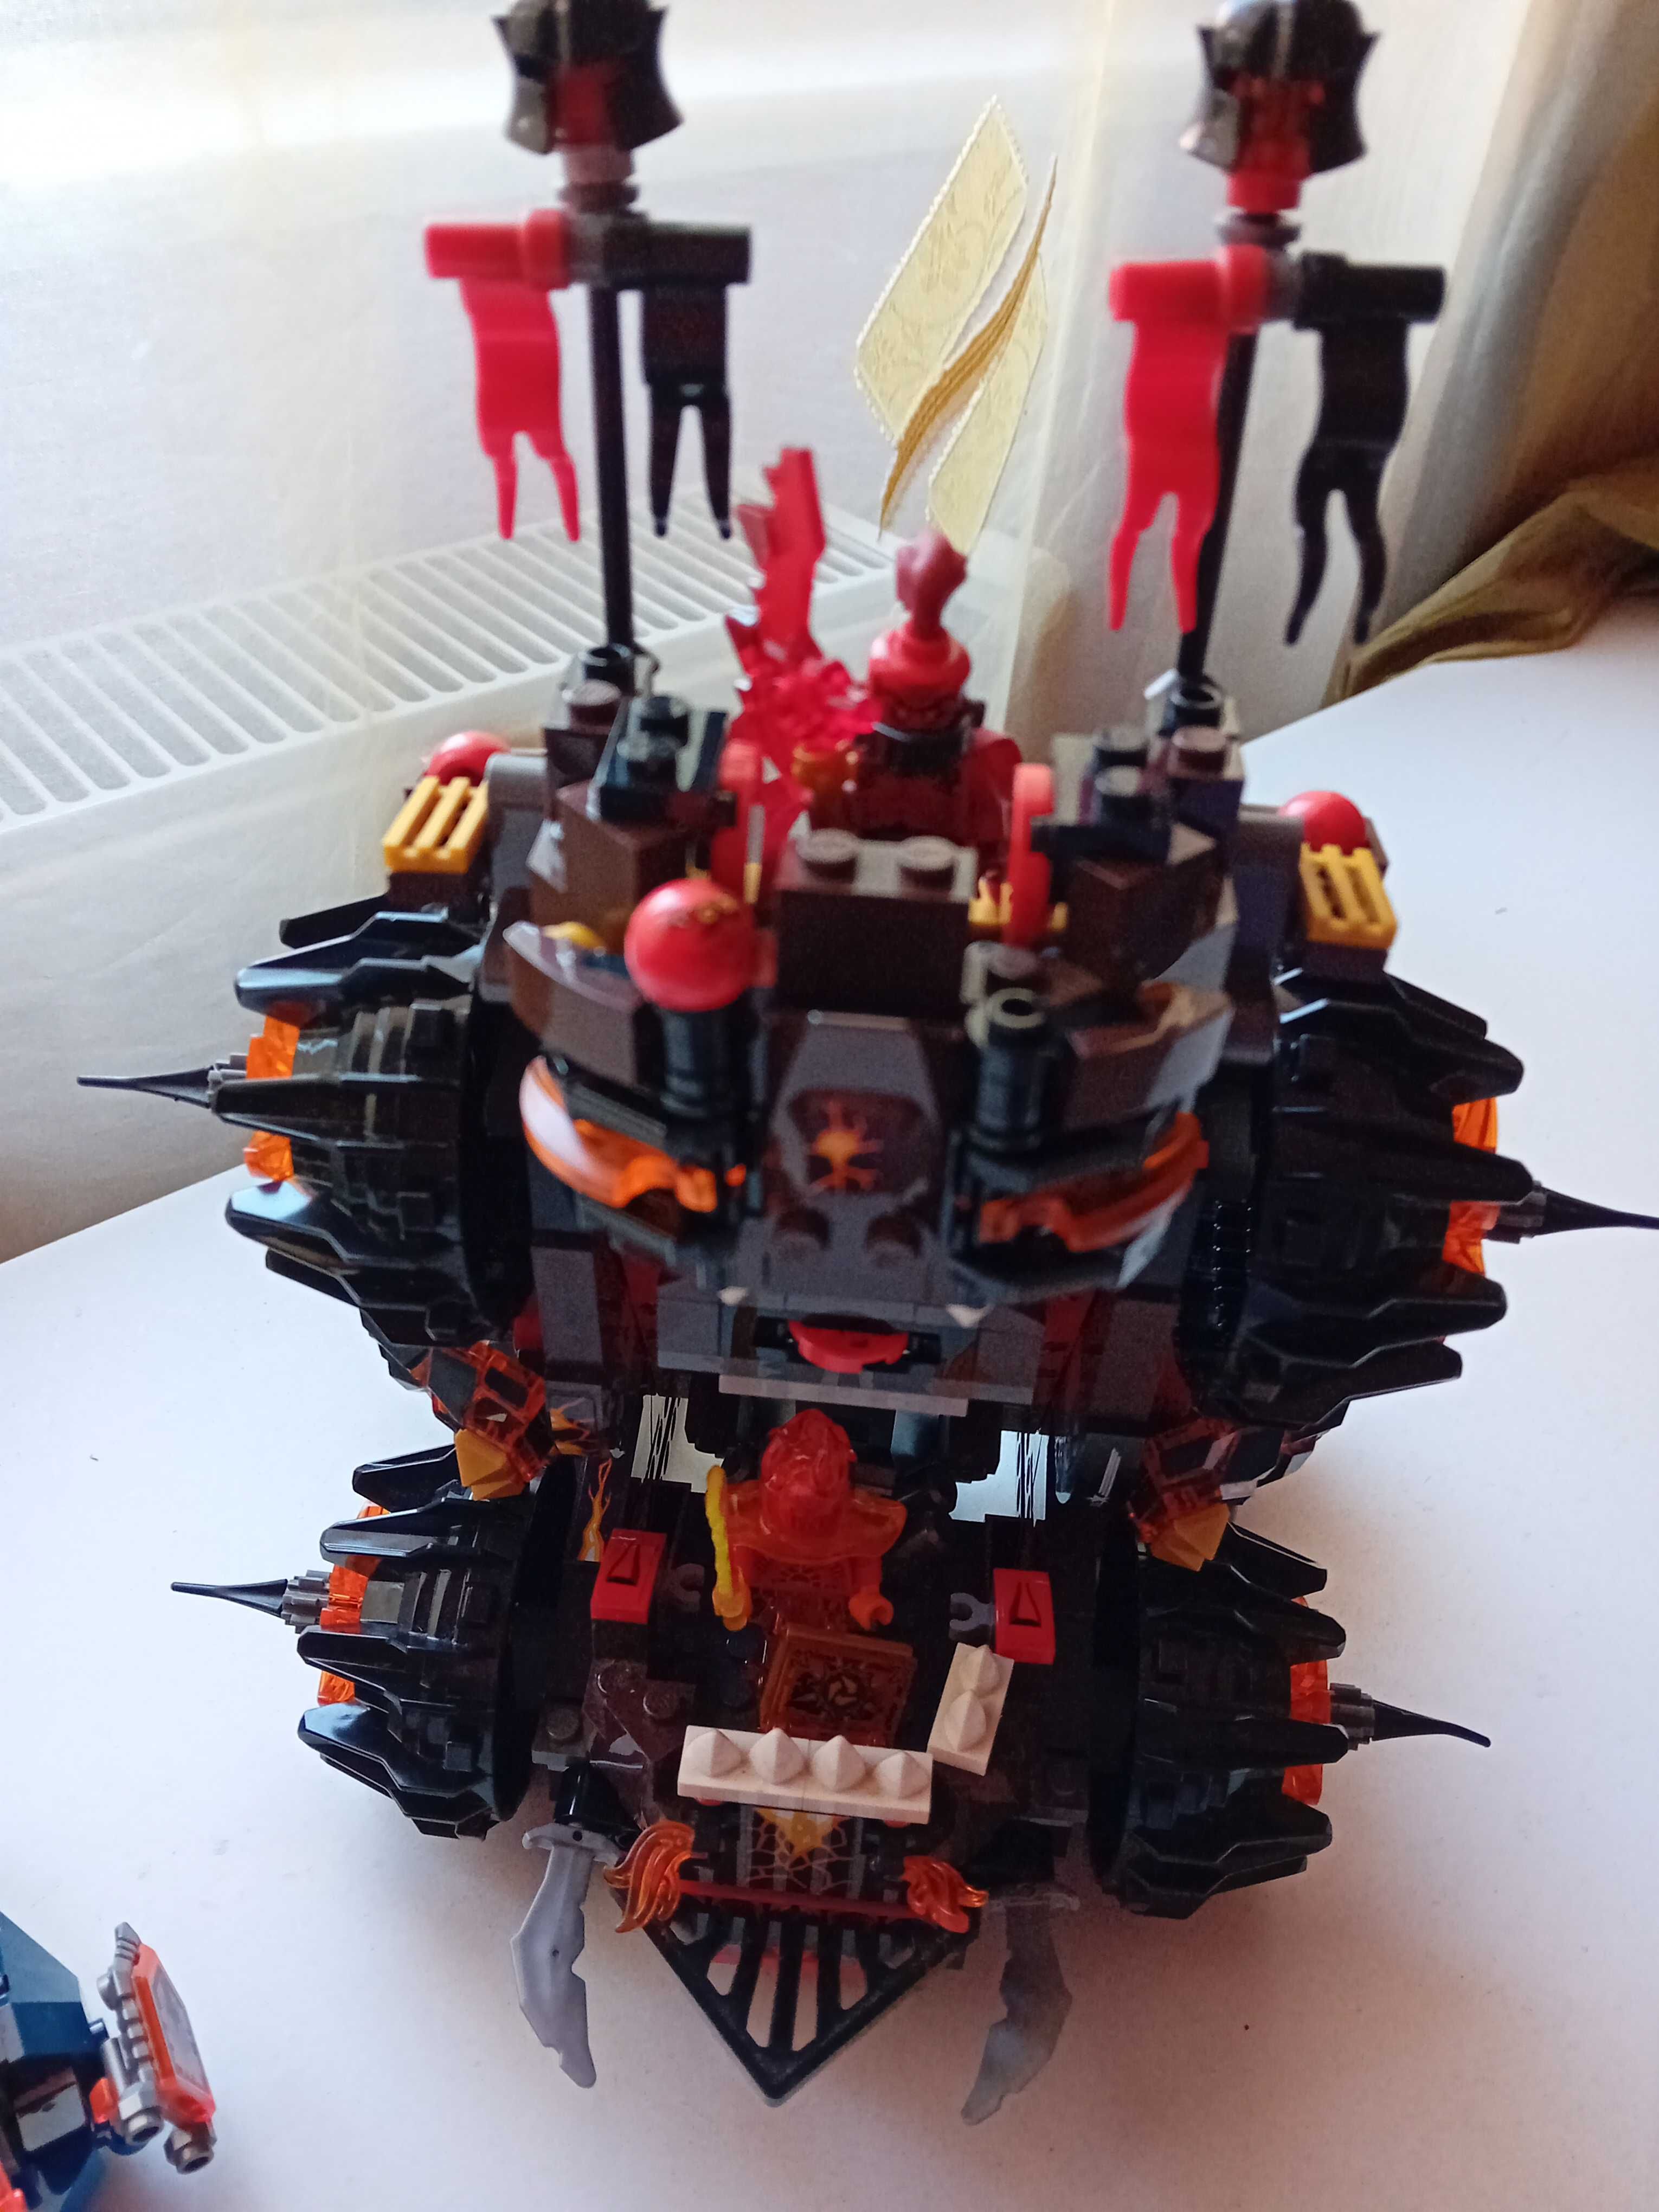 LEGO NEXO KNIGHTS Masina de asediu a generalului Magmar, 70321 , 516